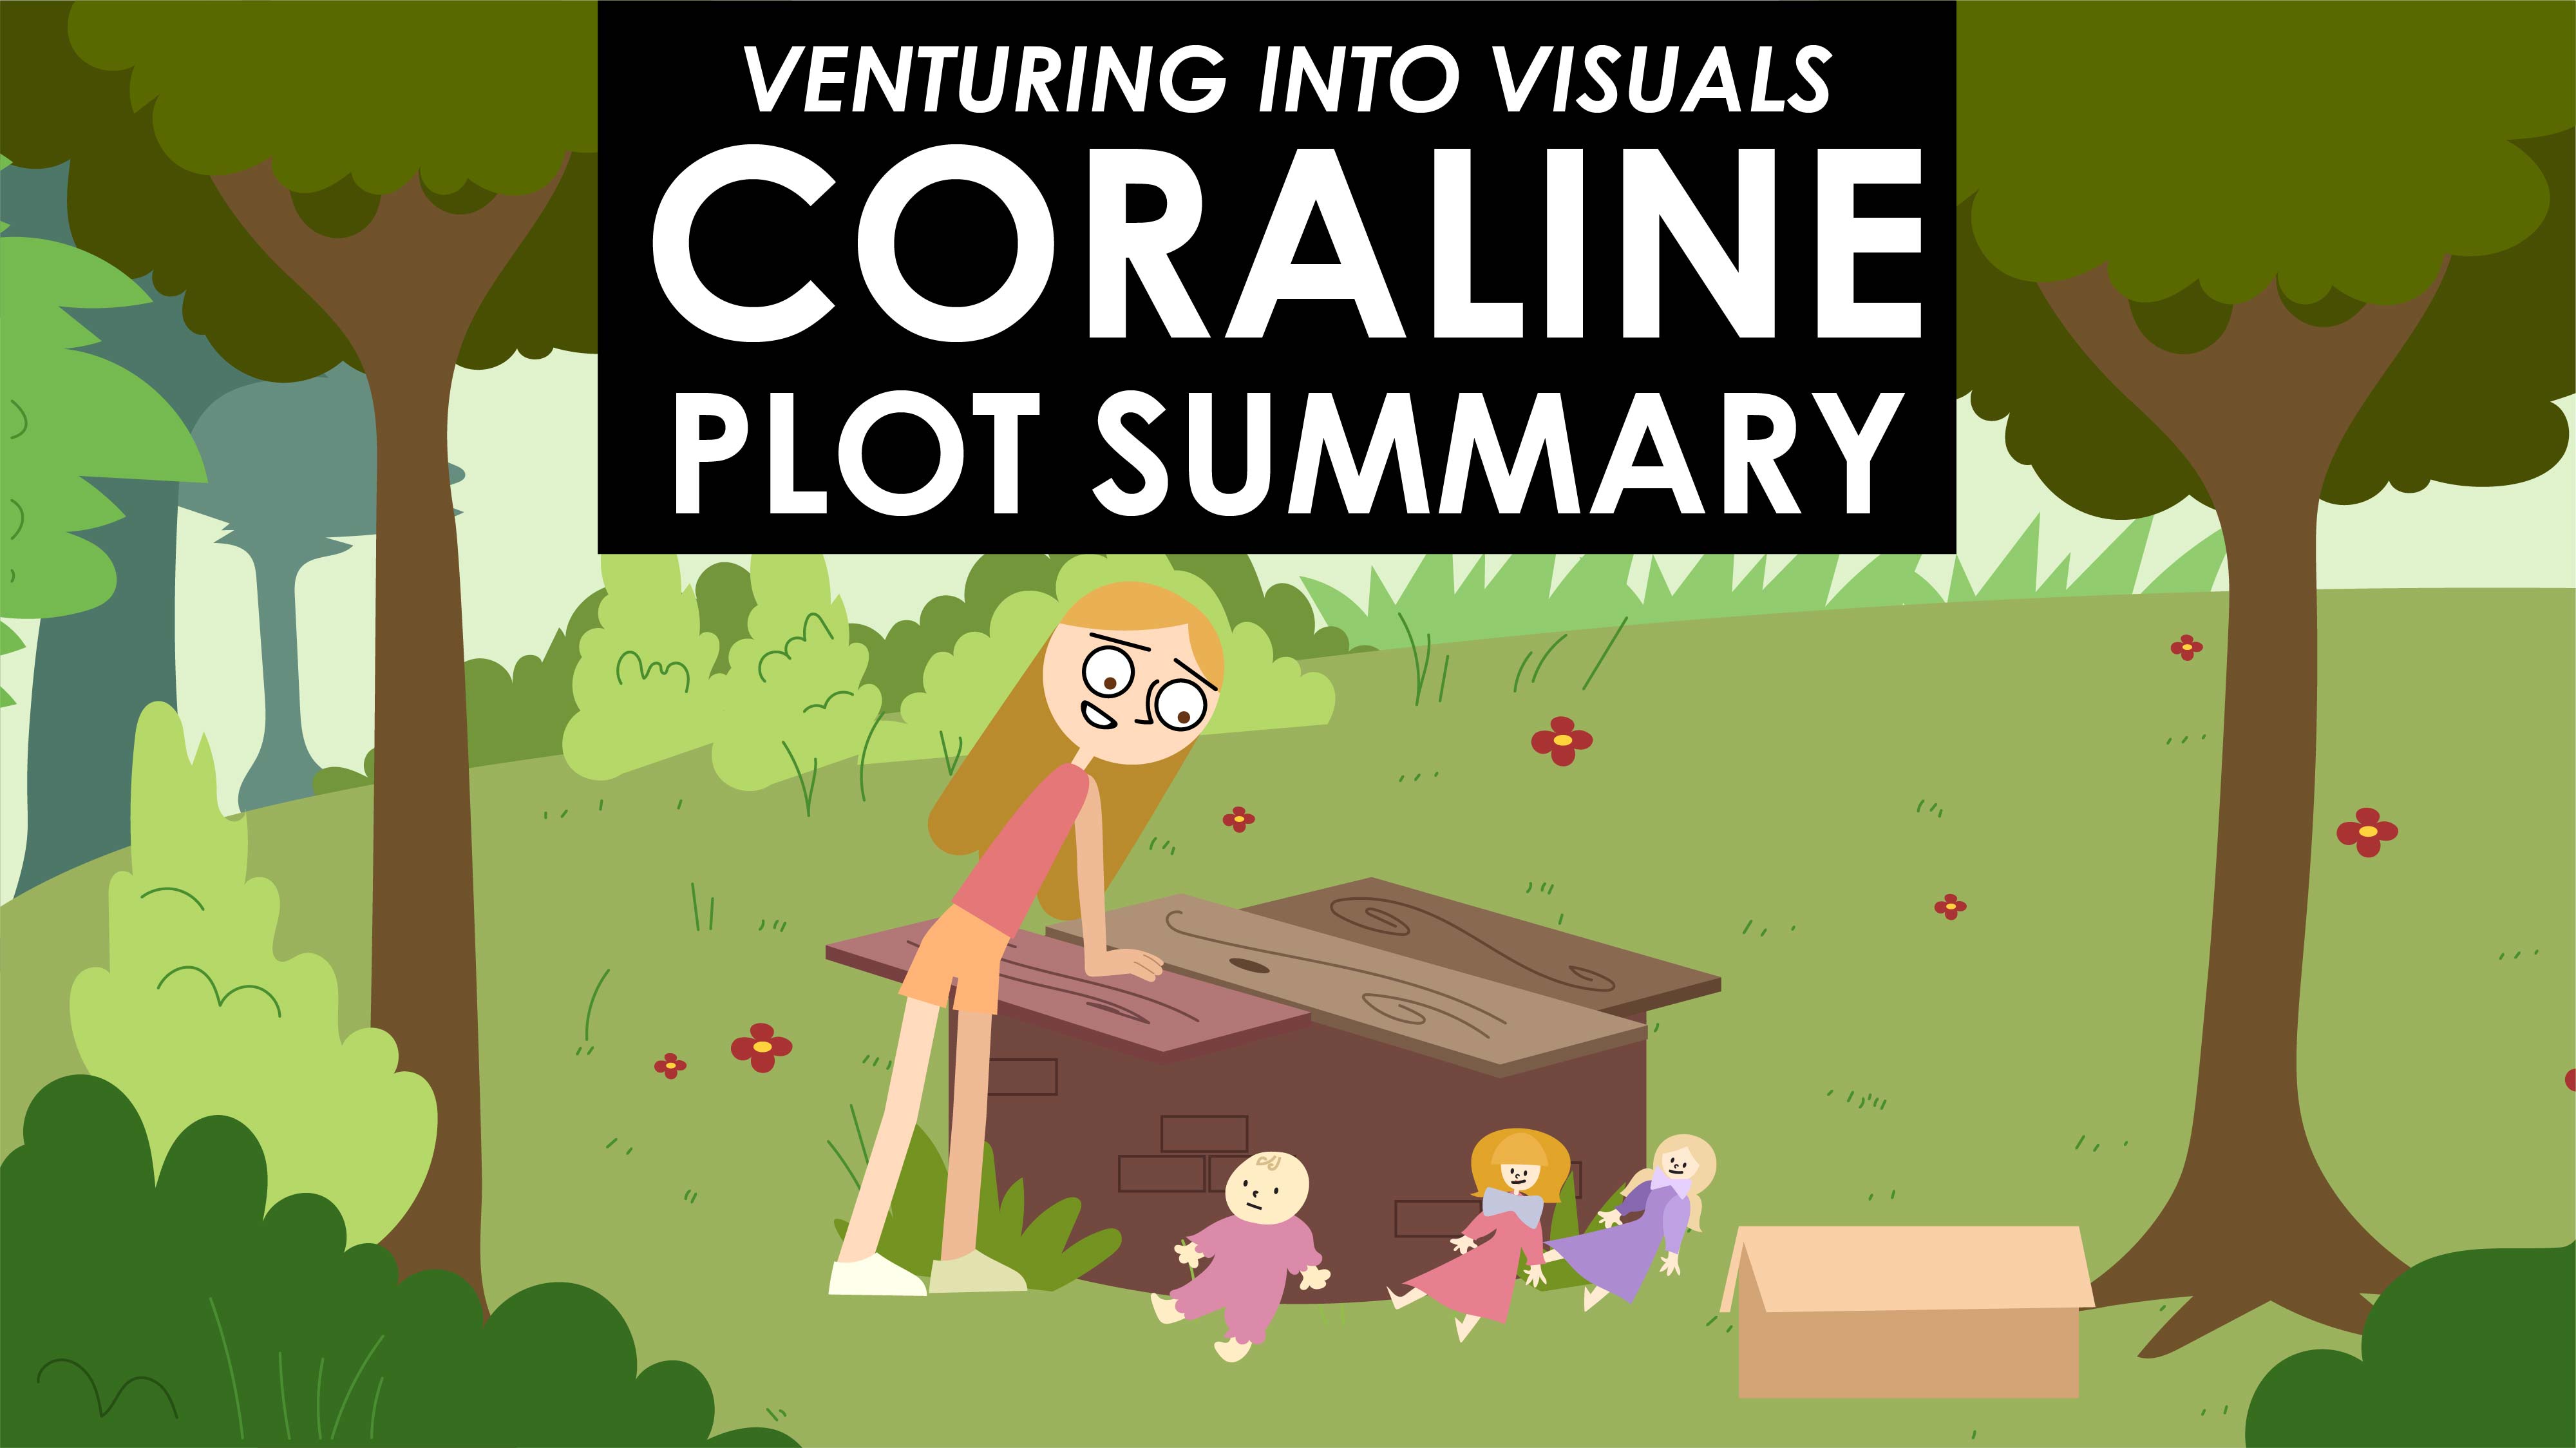 Coraline - Neil Gaiman - Plot Summary - Venturing Into Visuals Series